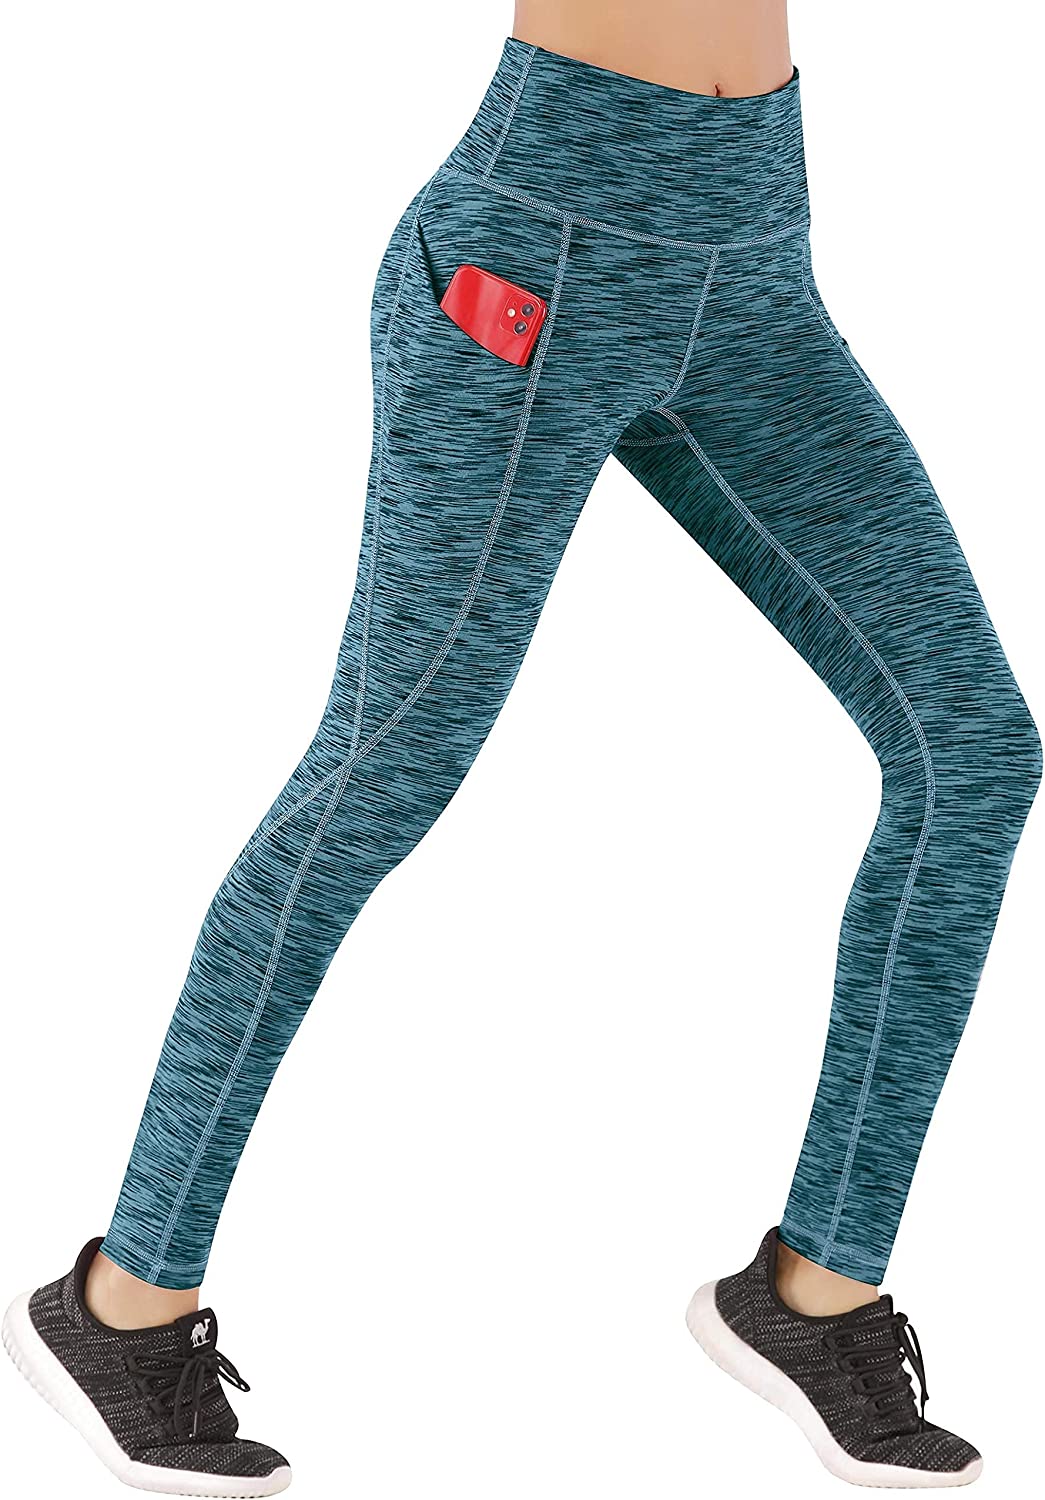 Ewedoos Womens High Waisted Legging Yoga Pants with Pockets, Navy, Medium